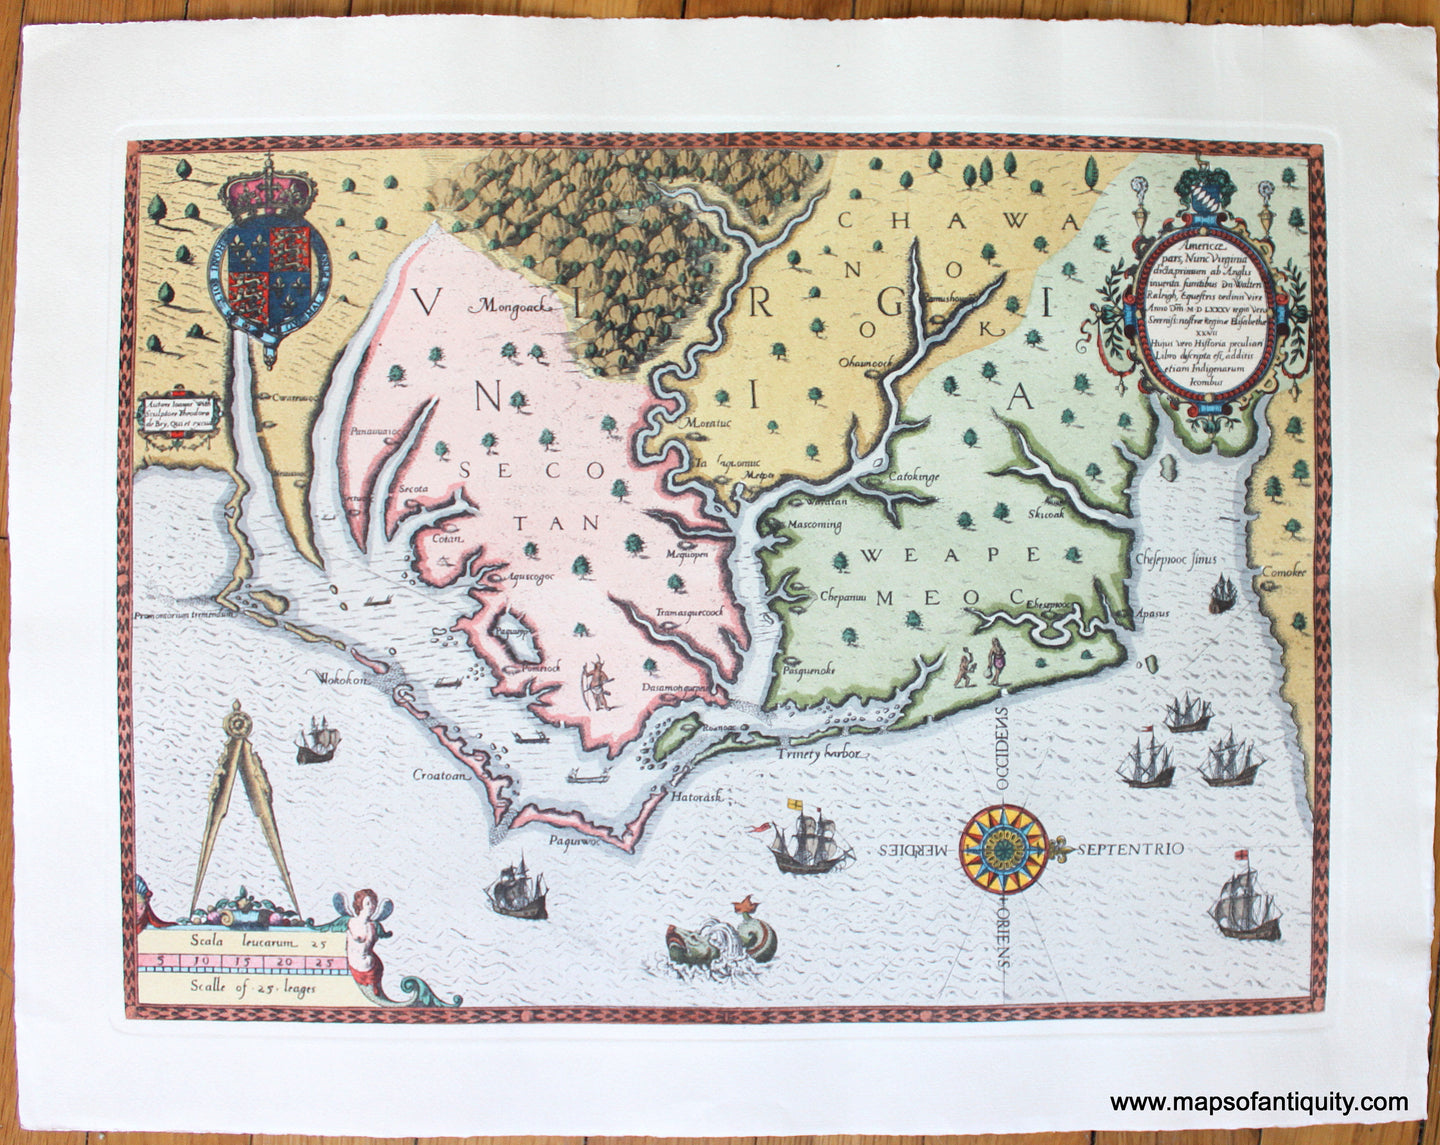 Antique-Map-Partial-Virginia-Americae-pars-Nunc-Virginia-Reproduction-Reproductions-Debray-1585-Maps-Of-Antiquity